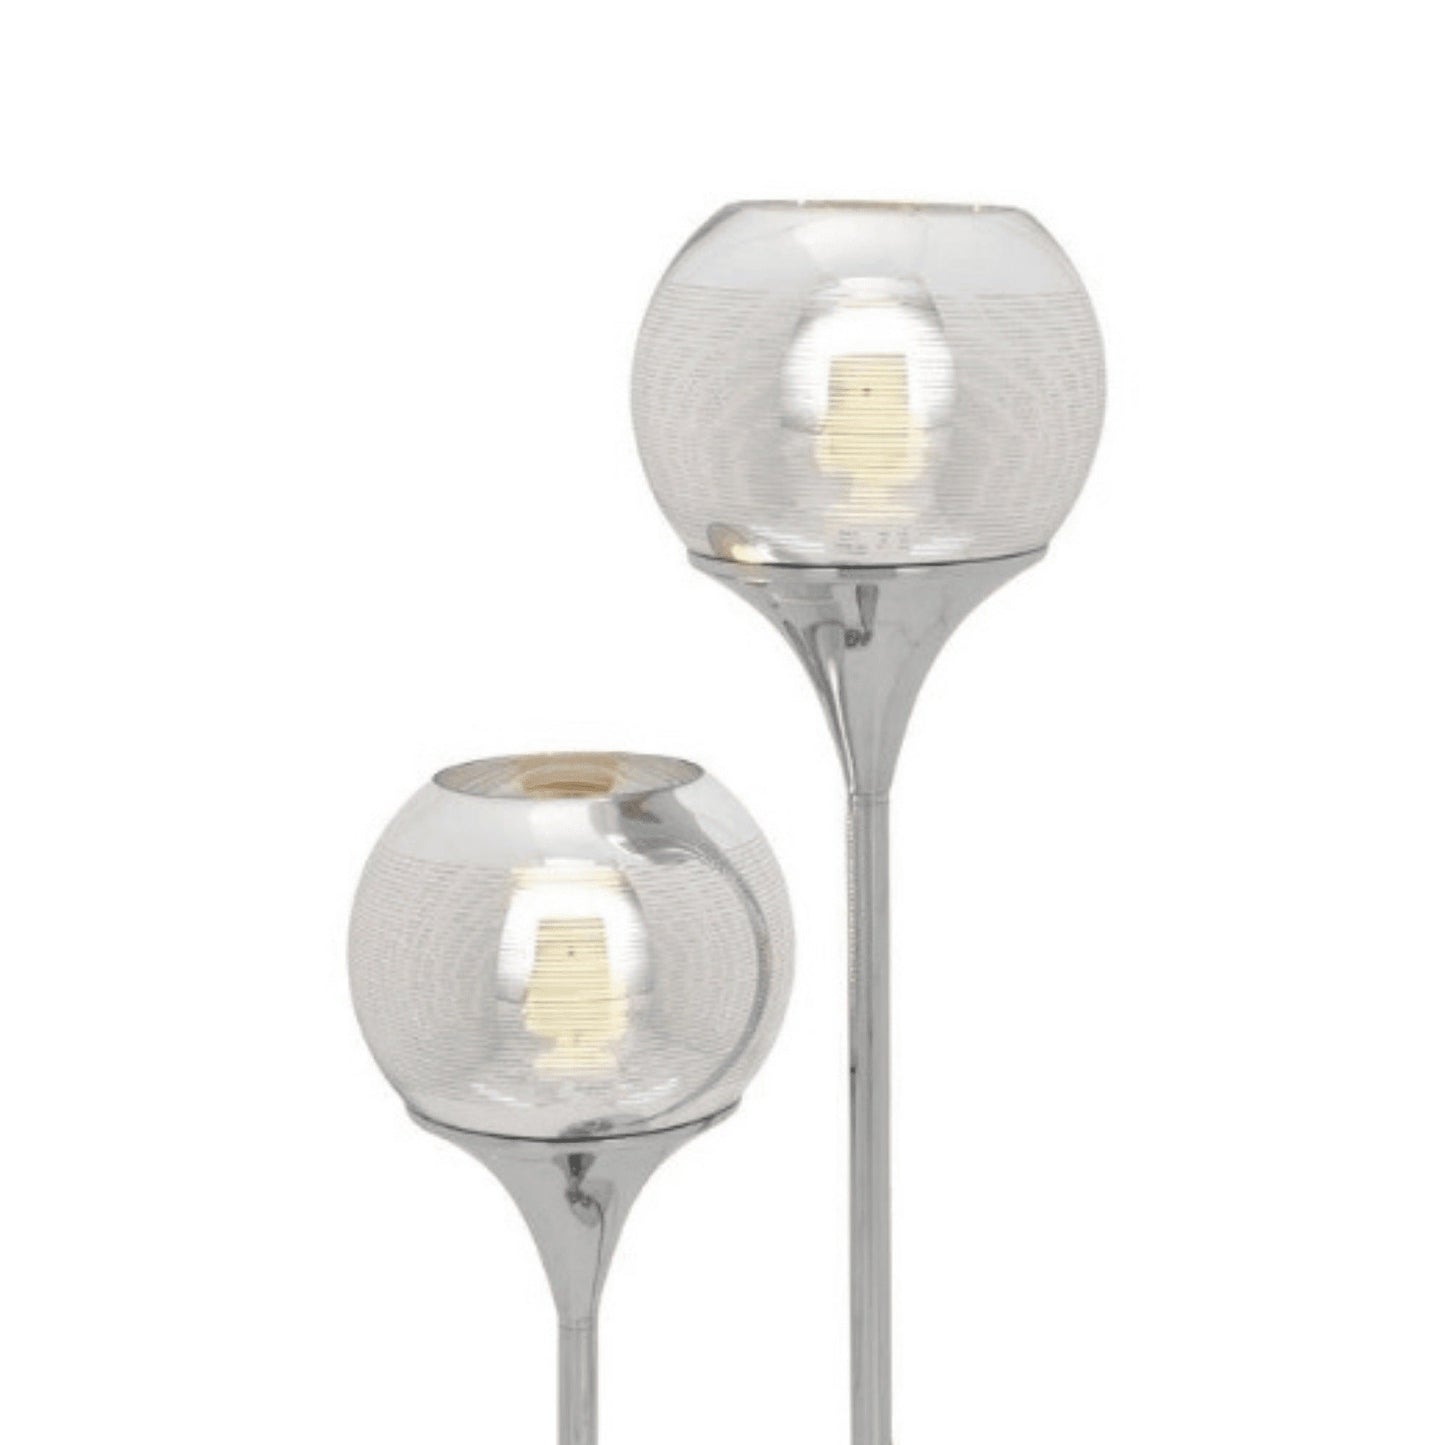 ISTANBUl Chrome Shades Table Lamp 2 Lights